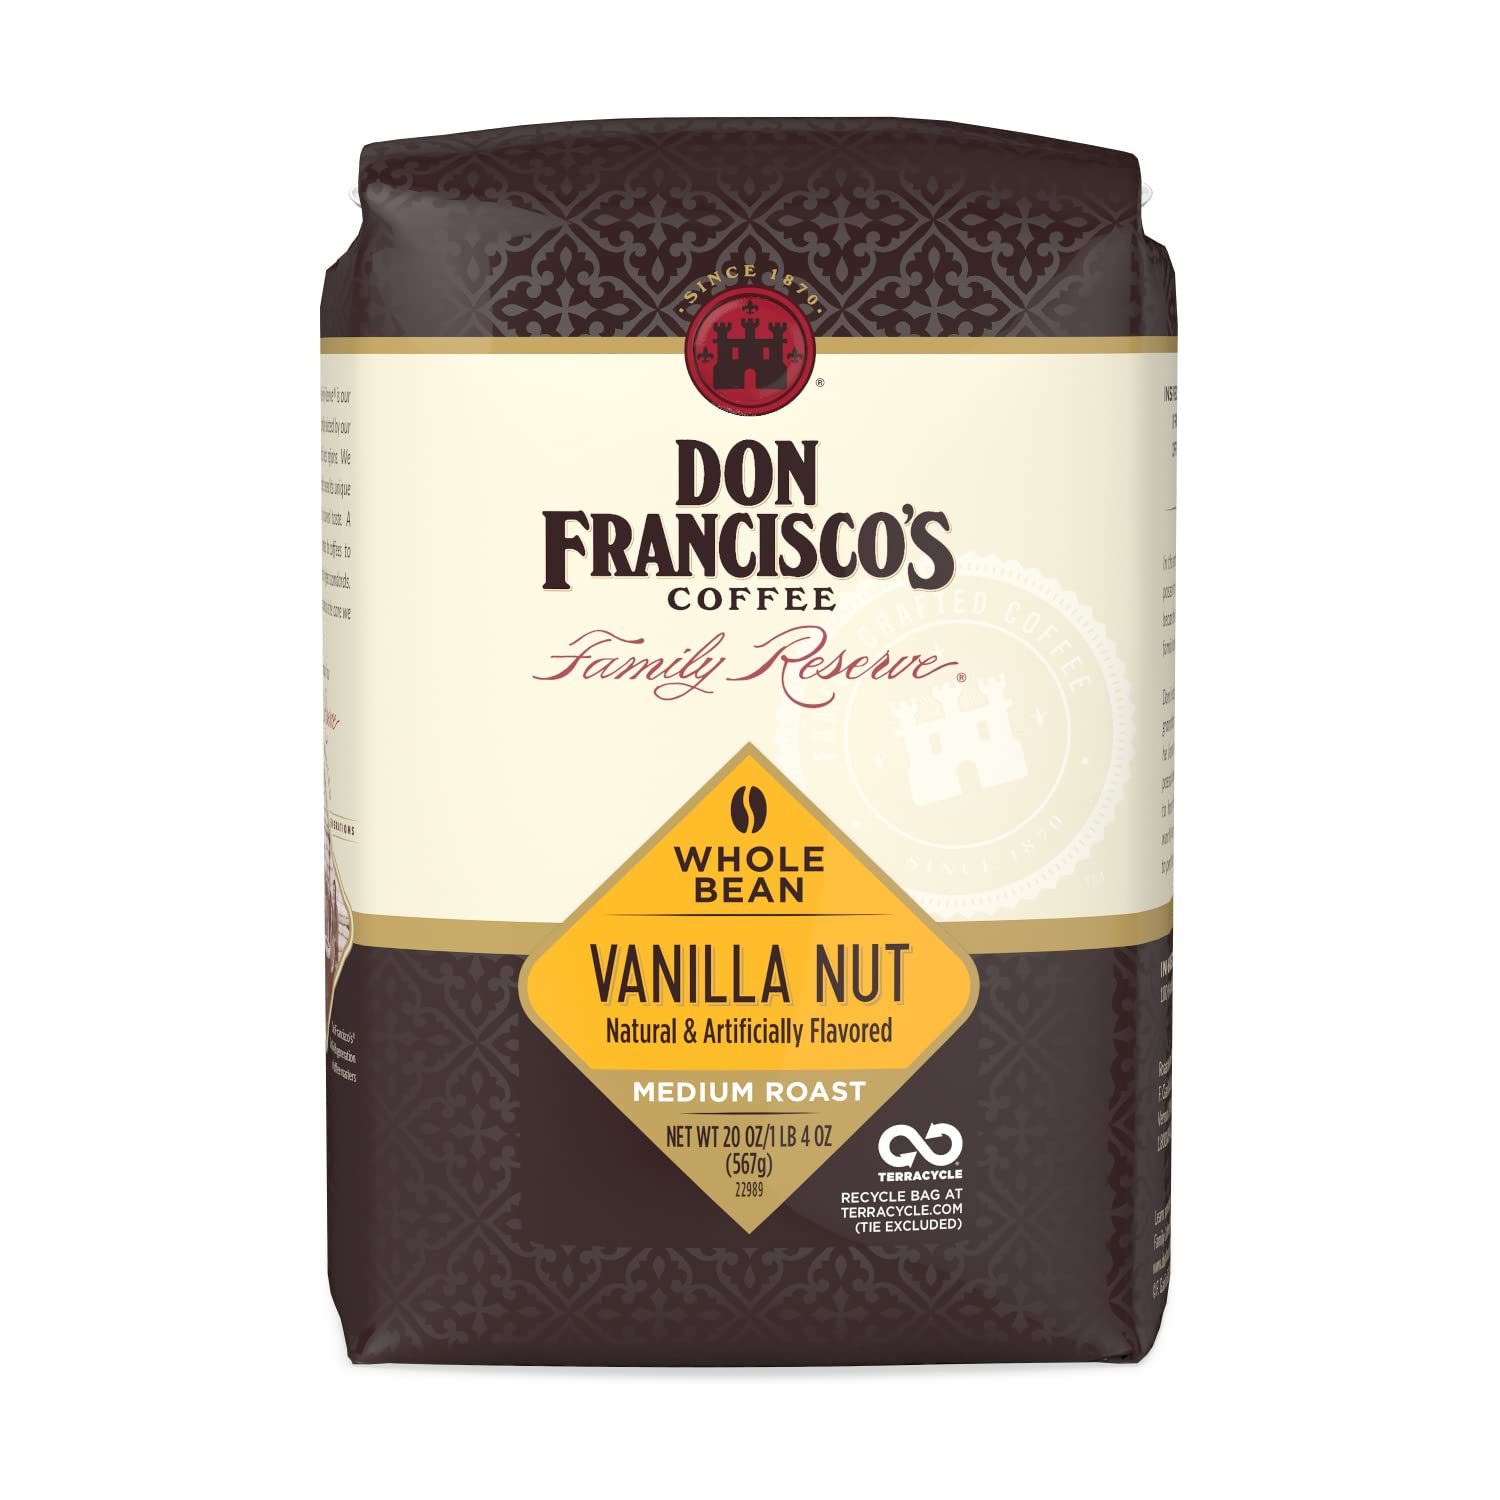 Don Franciscos Kona Blend Medium Roast Whole Bean Coffee (18 oz Bag)